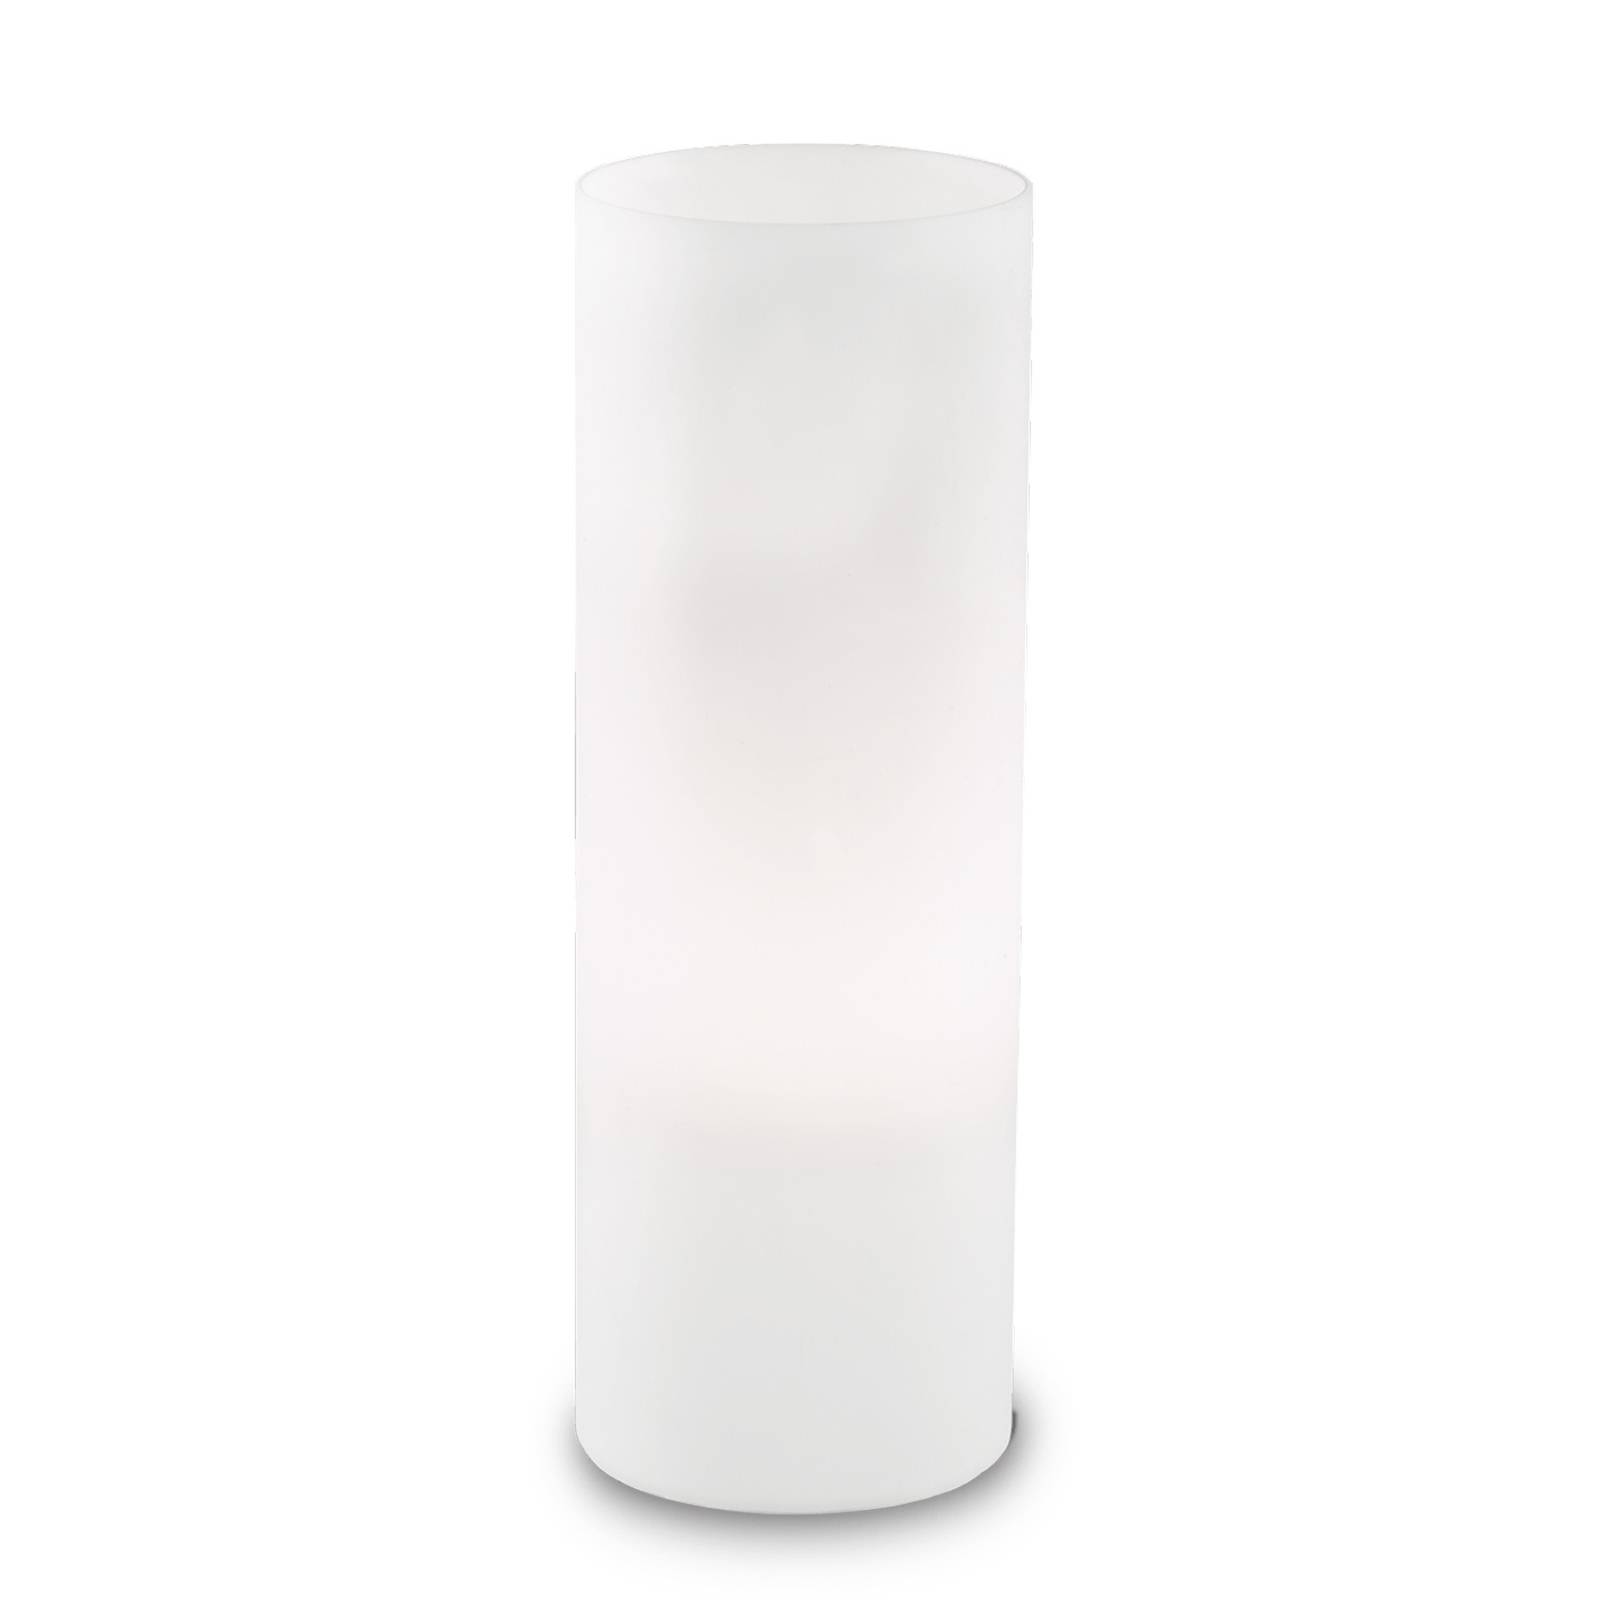 Ideallux Edo bordlampe i hvid glas højde 35 cm